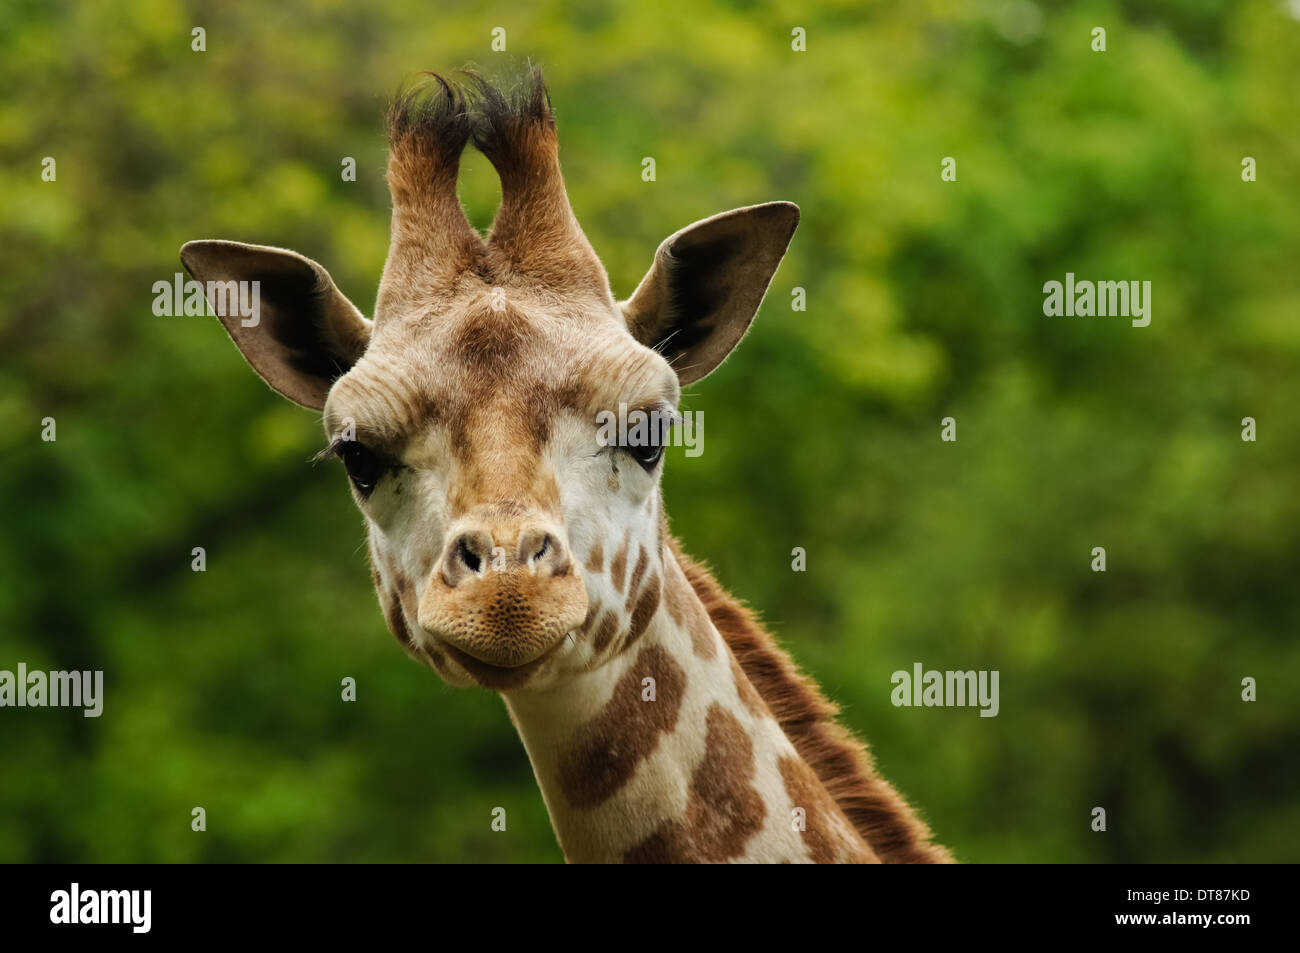 close up portrait of Rothschild's giraffe Stock Photo